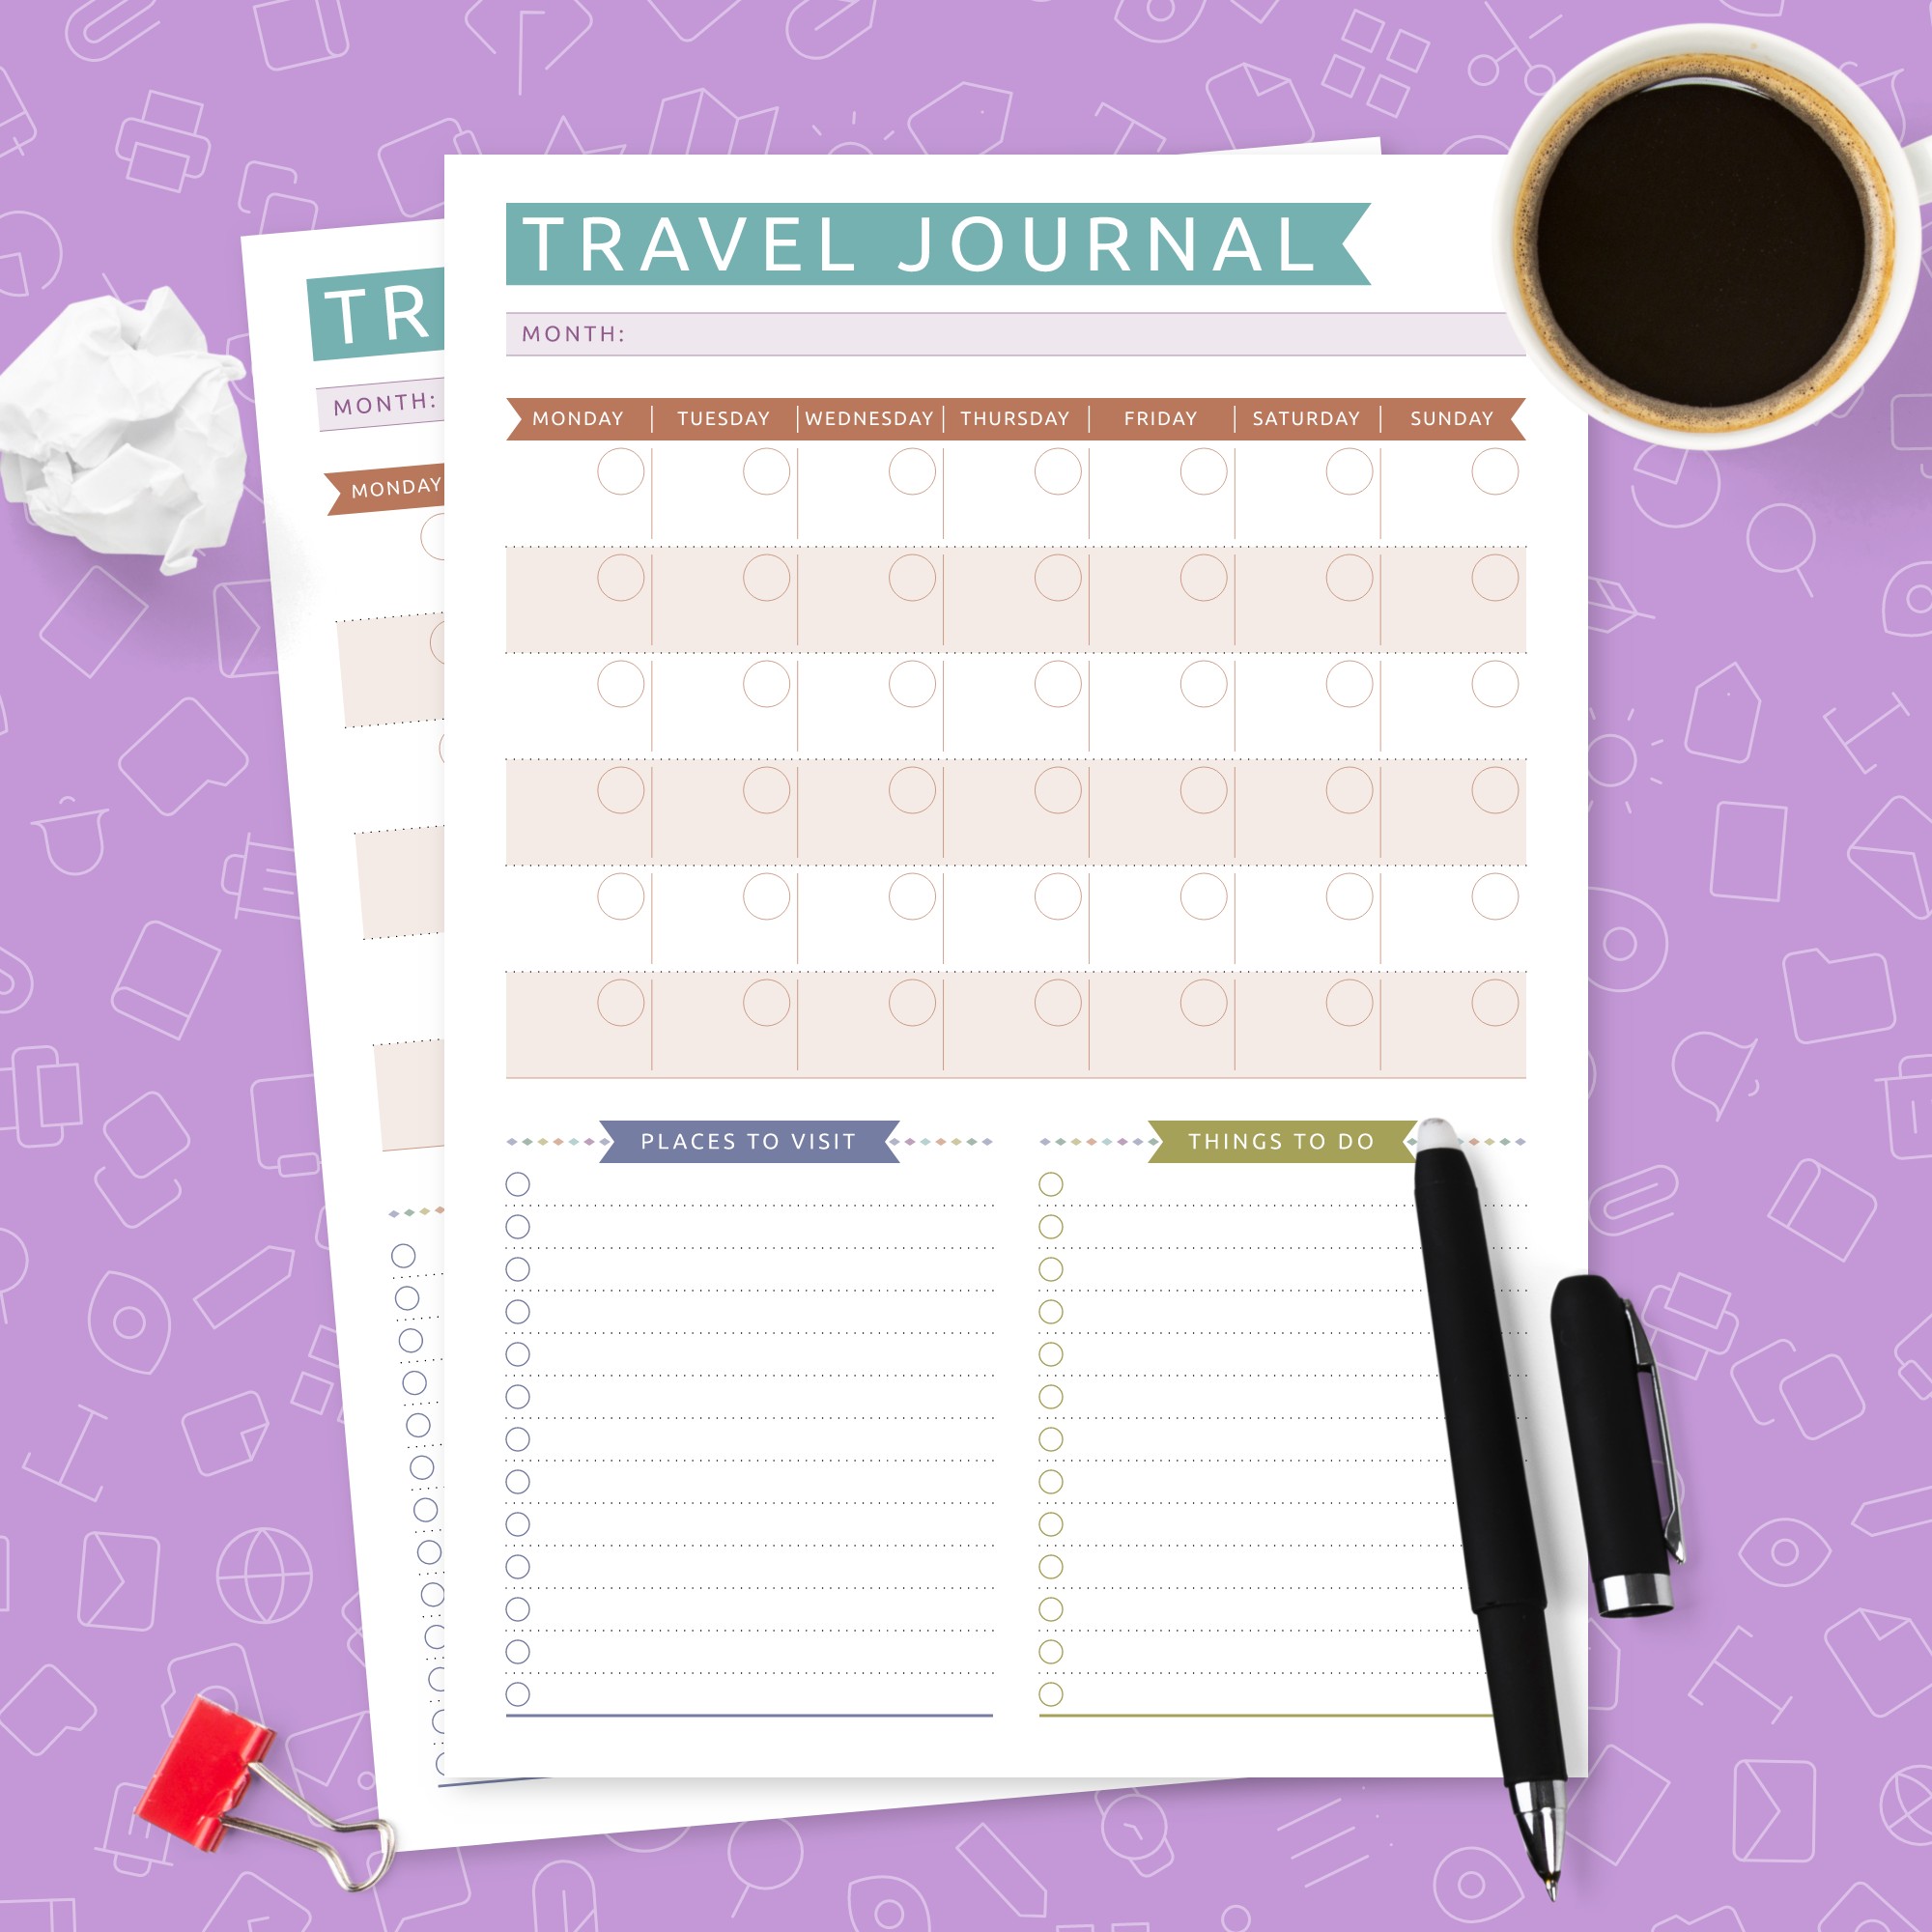 google doc travel journal templates free